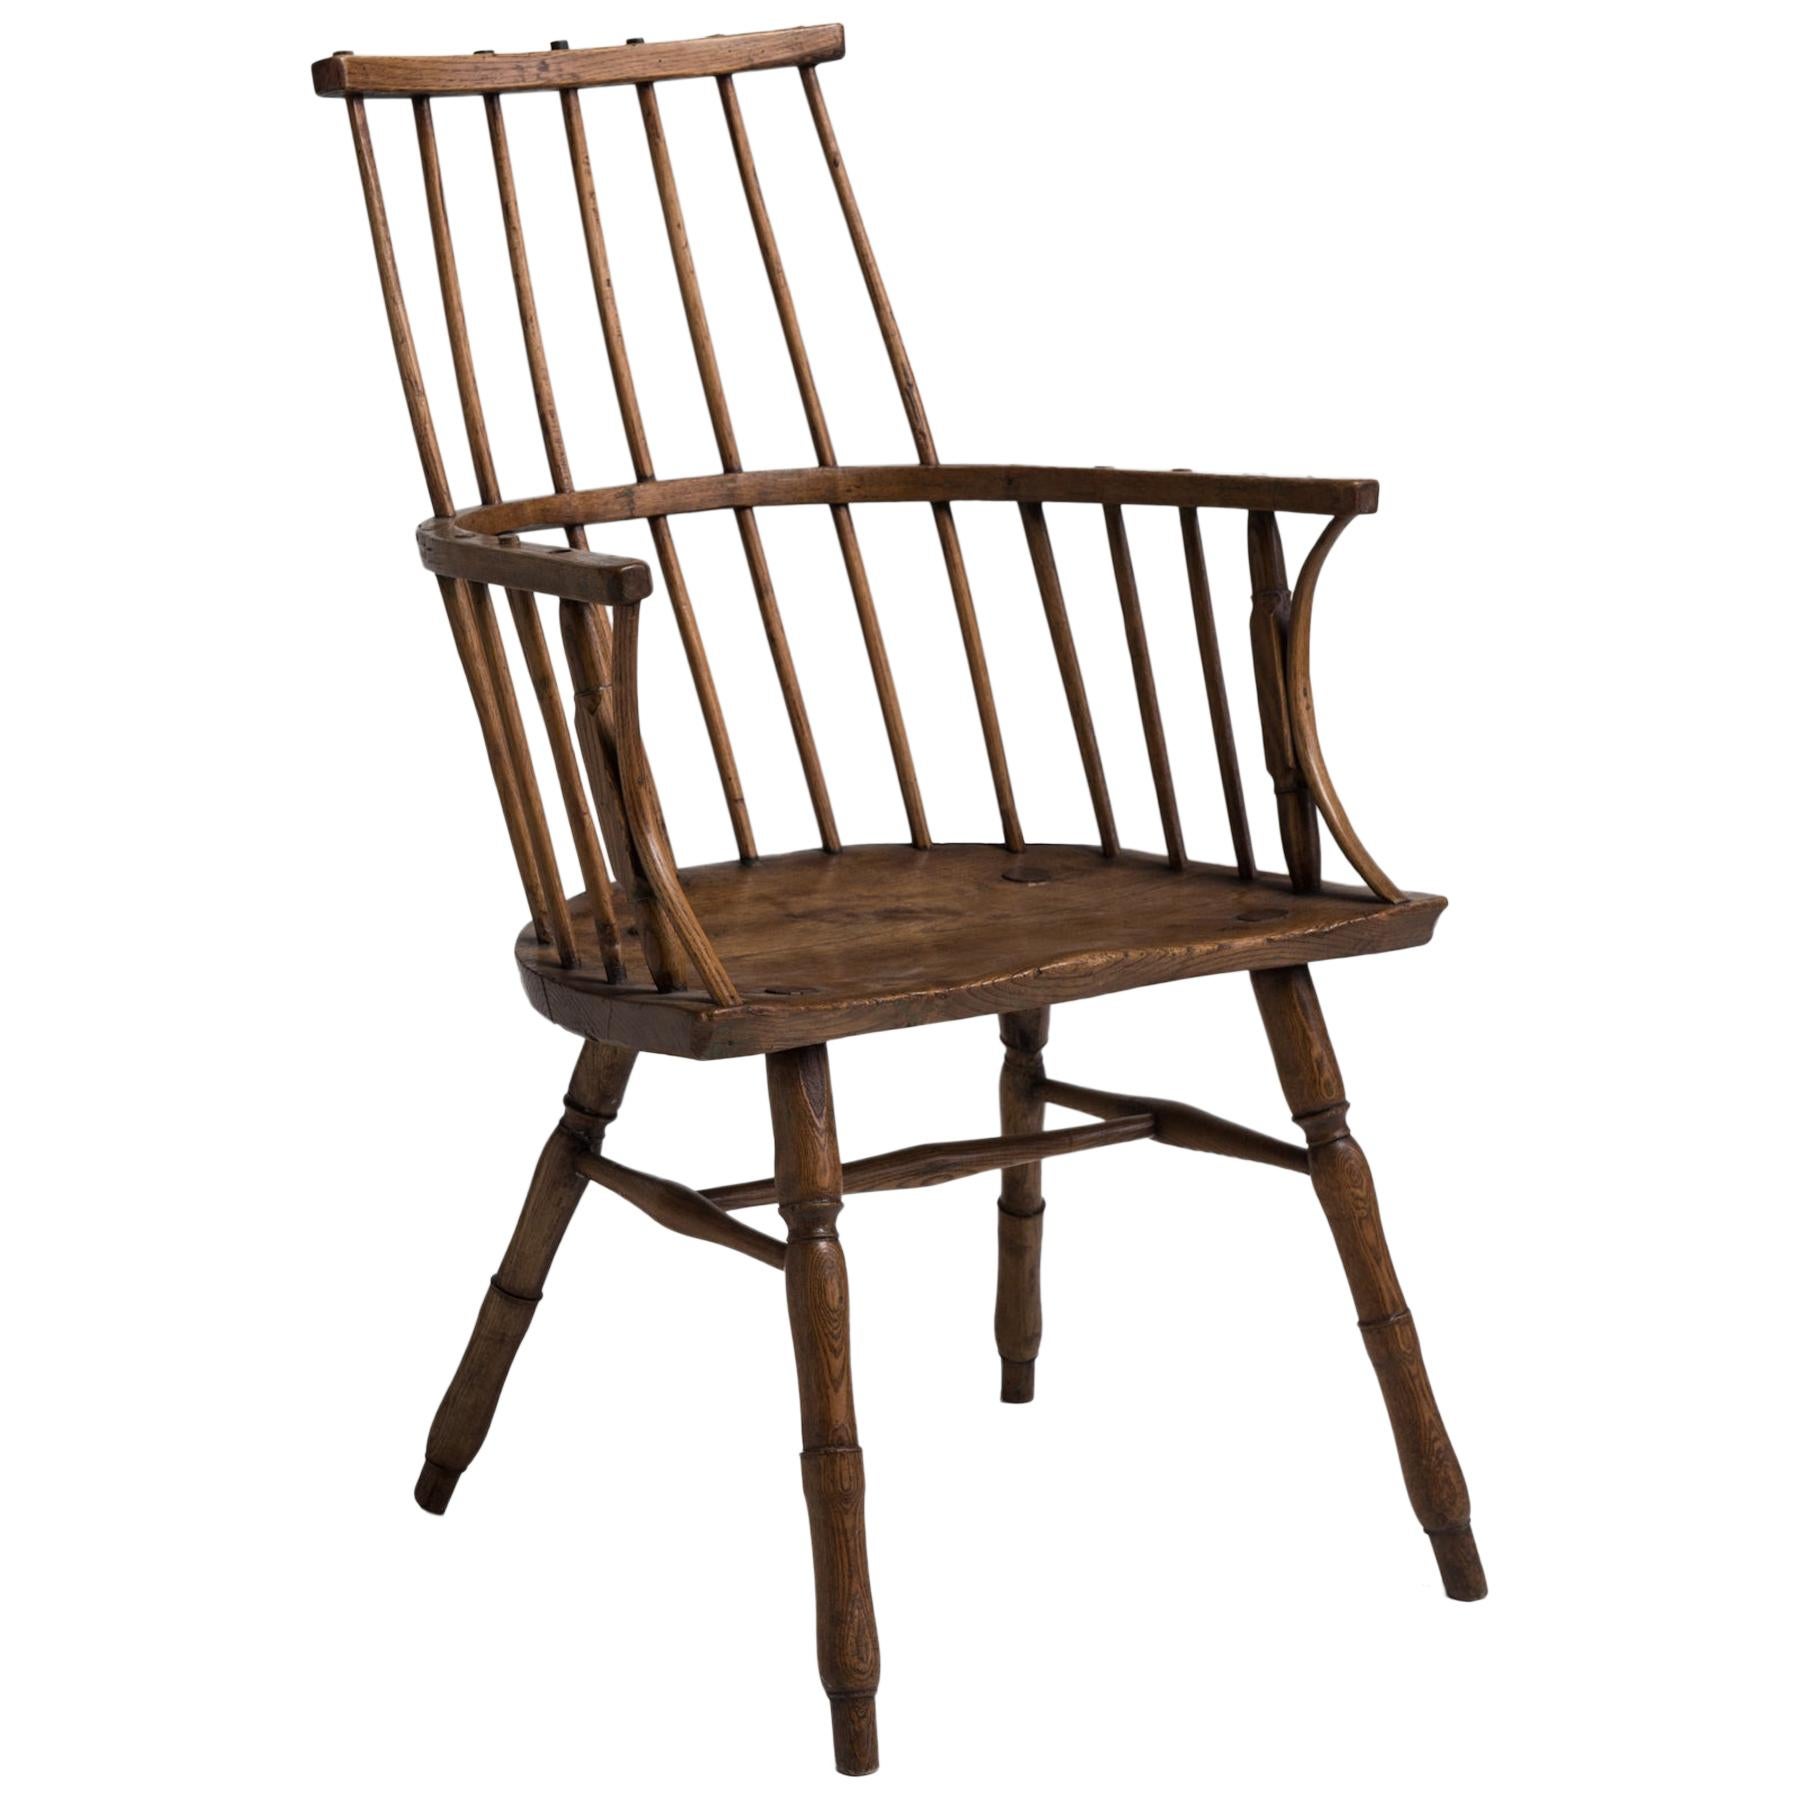 Primitive Ash Stick Chair, England, 18th Century